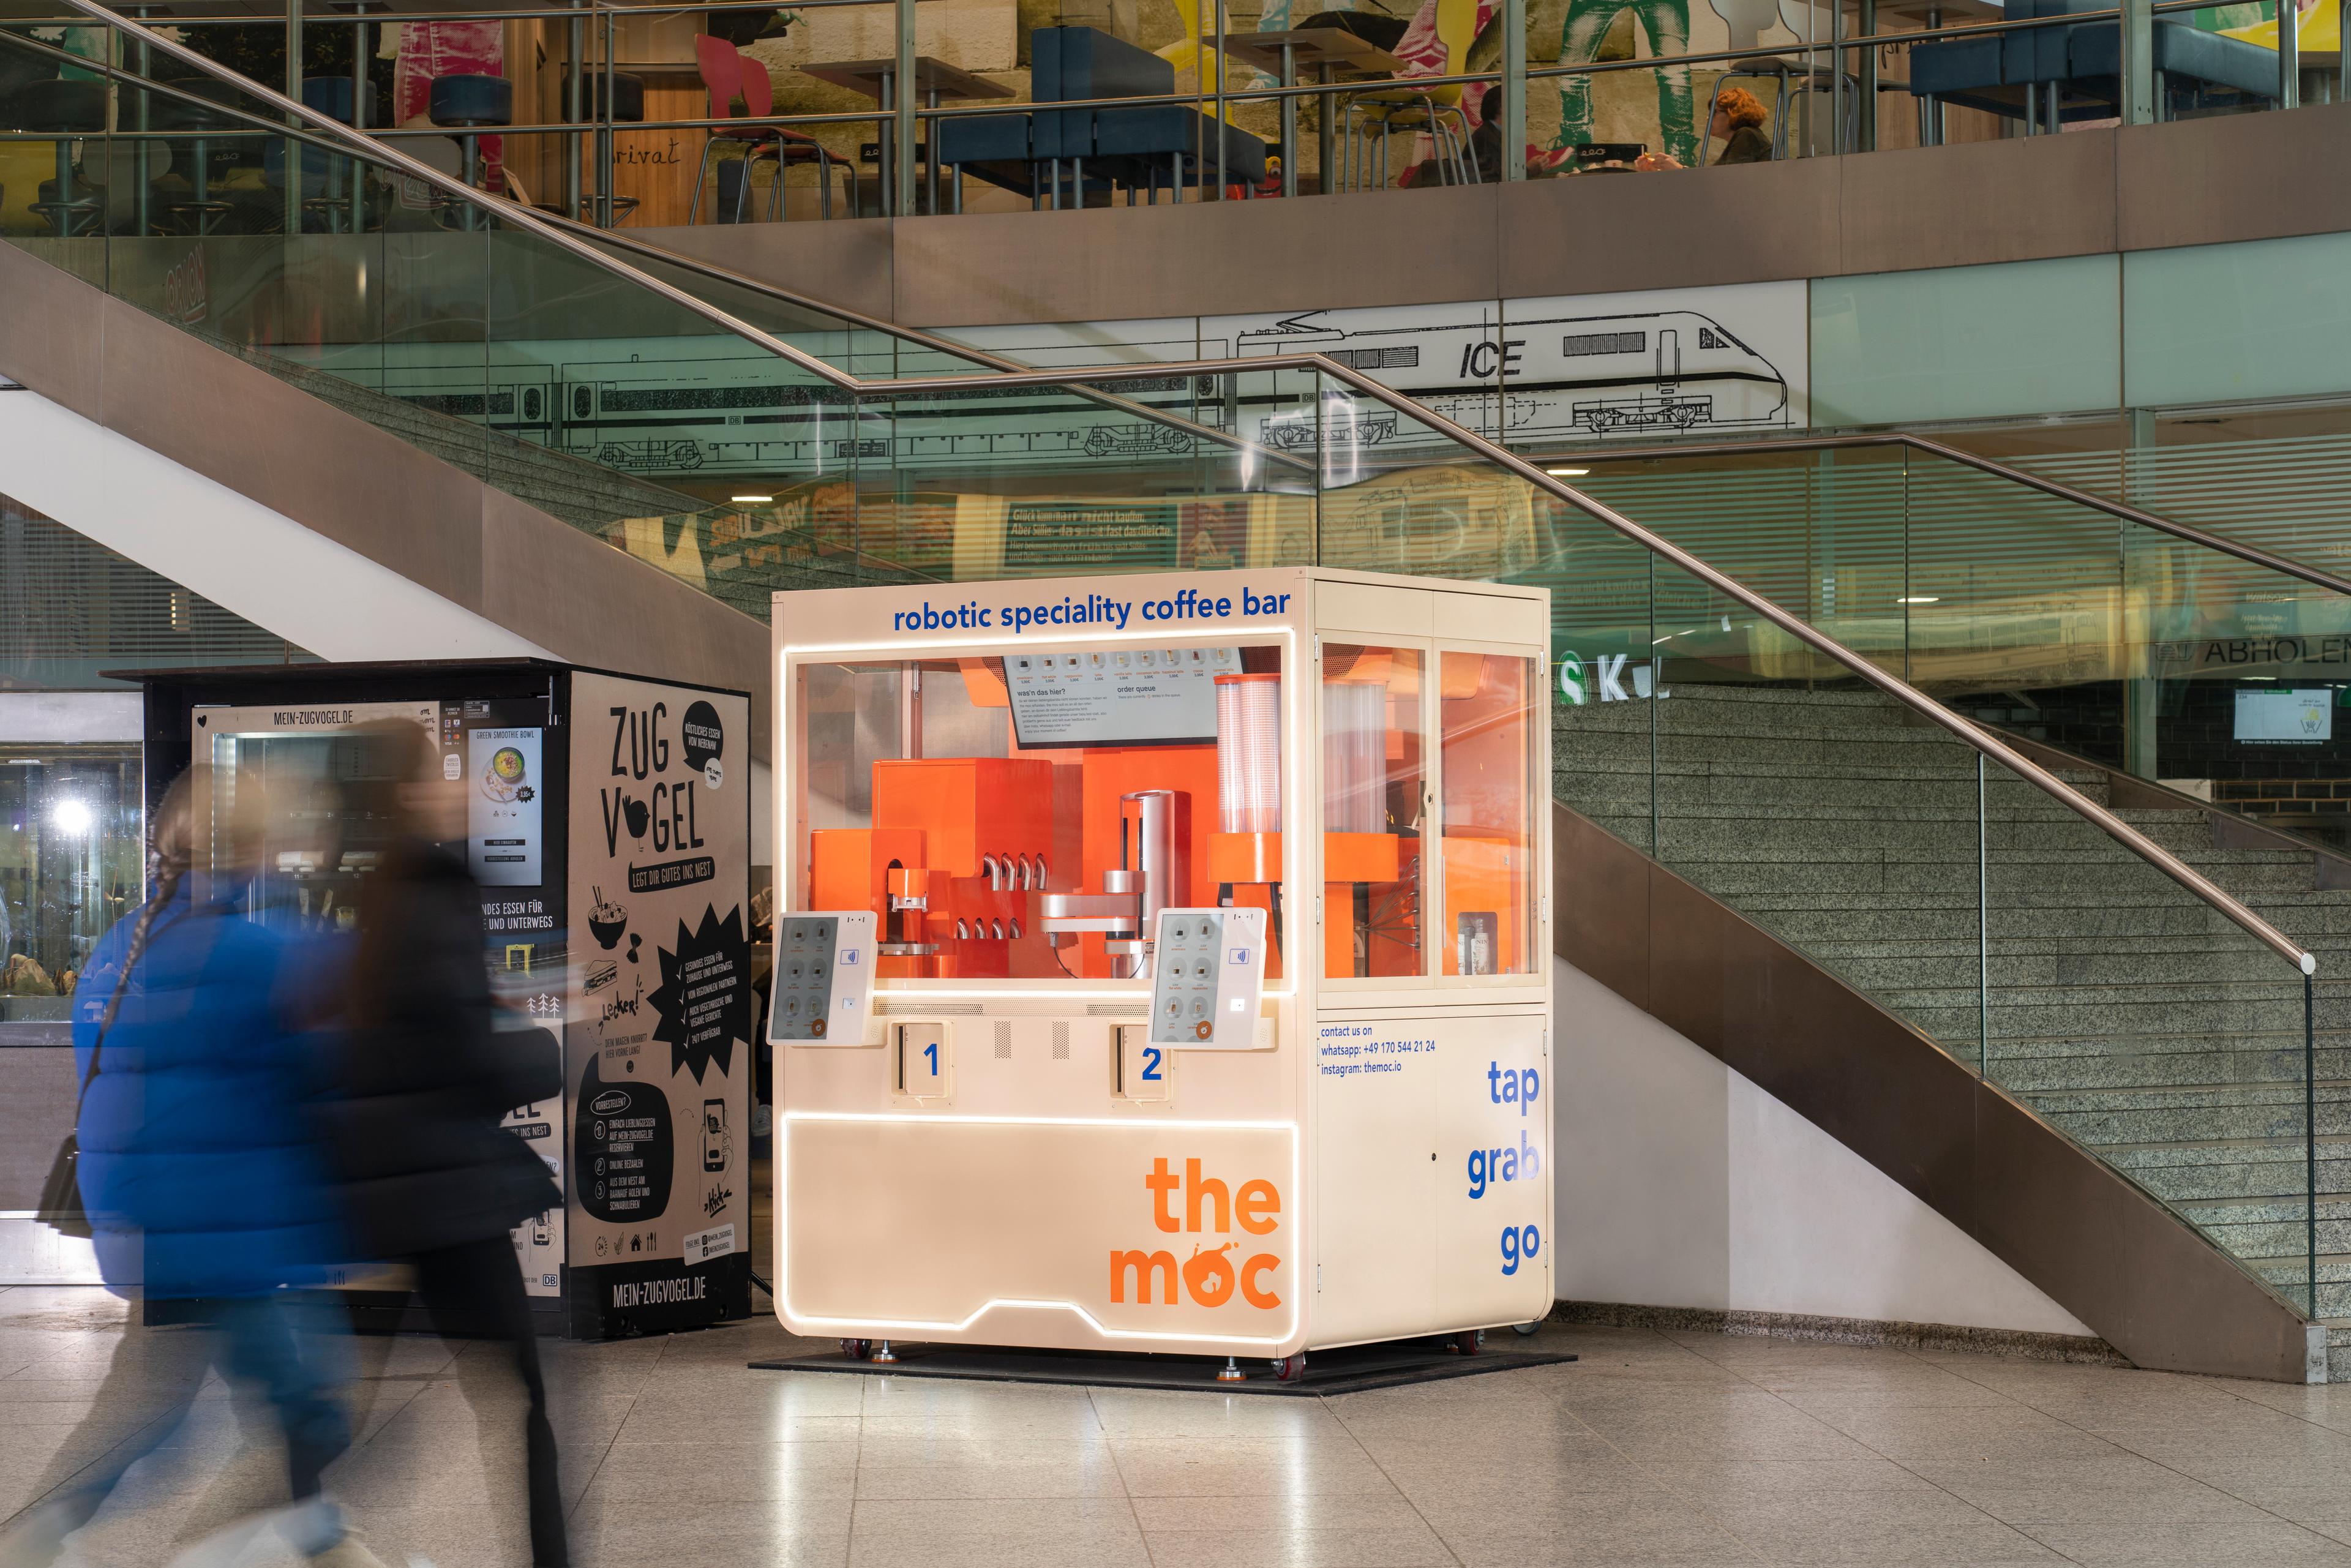 The orange barista robot ‘the moc’ at Berlin Ostbahnhof.